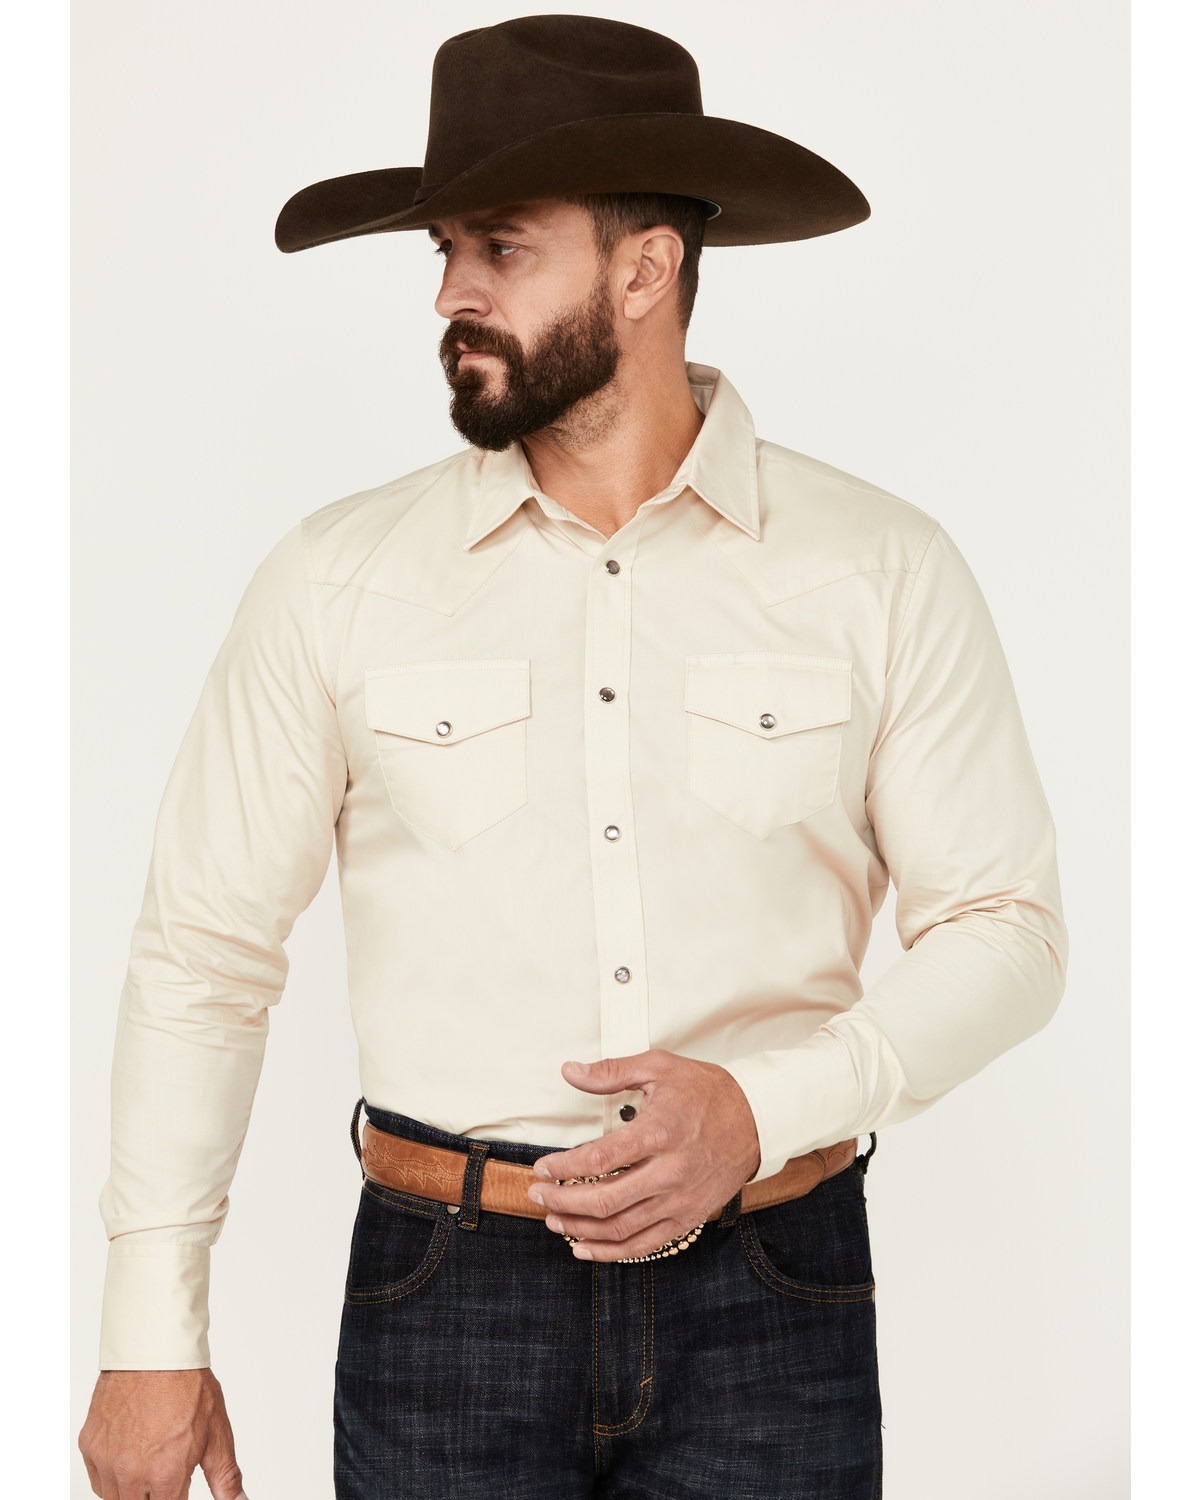 Gibson Trading Co Men's Axe Basic Long Sleeve Snap Western Shirt